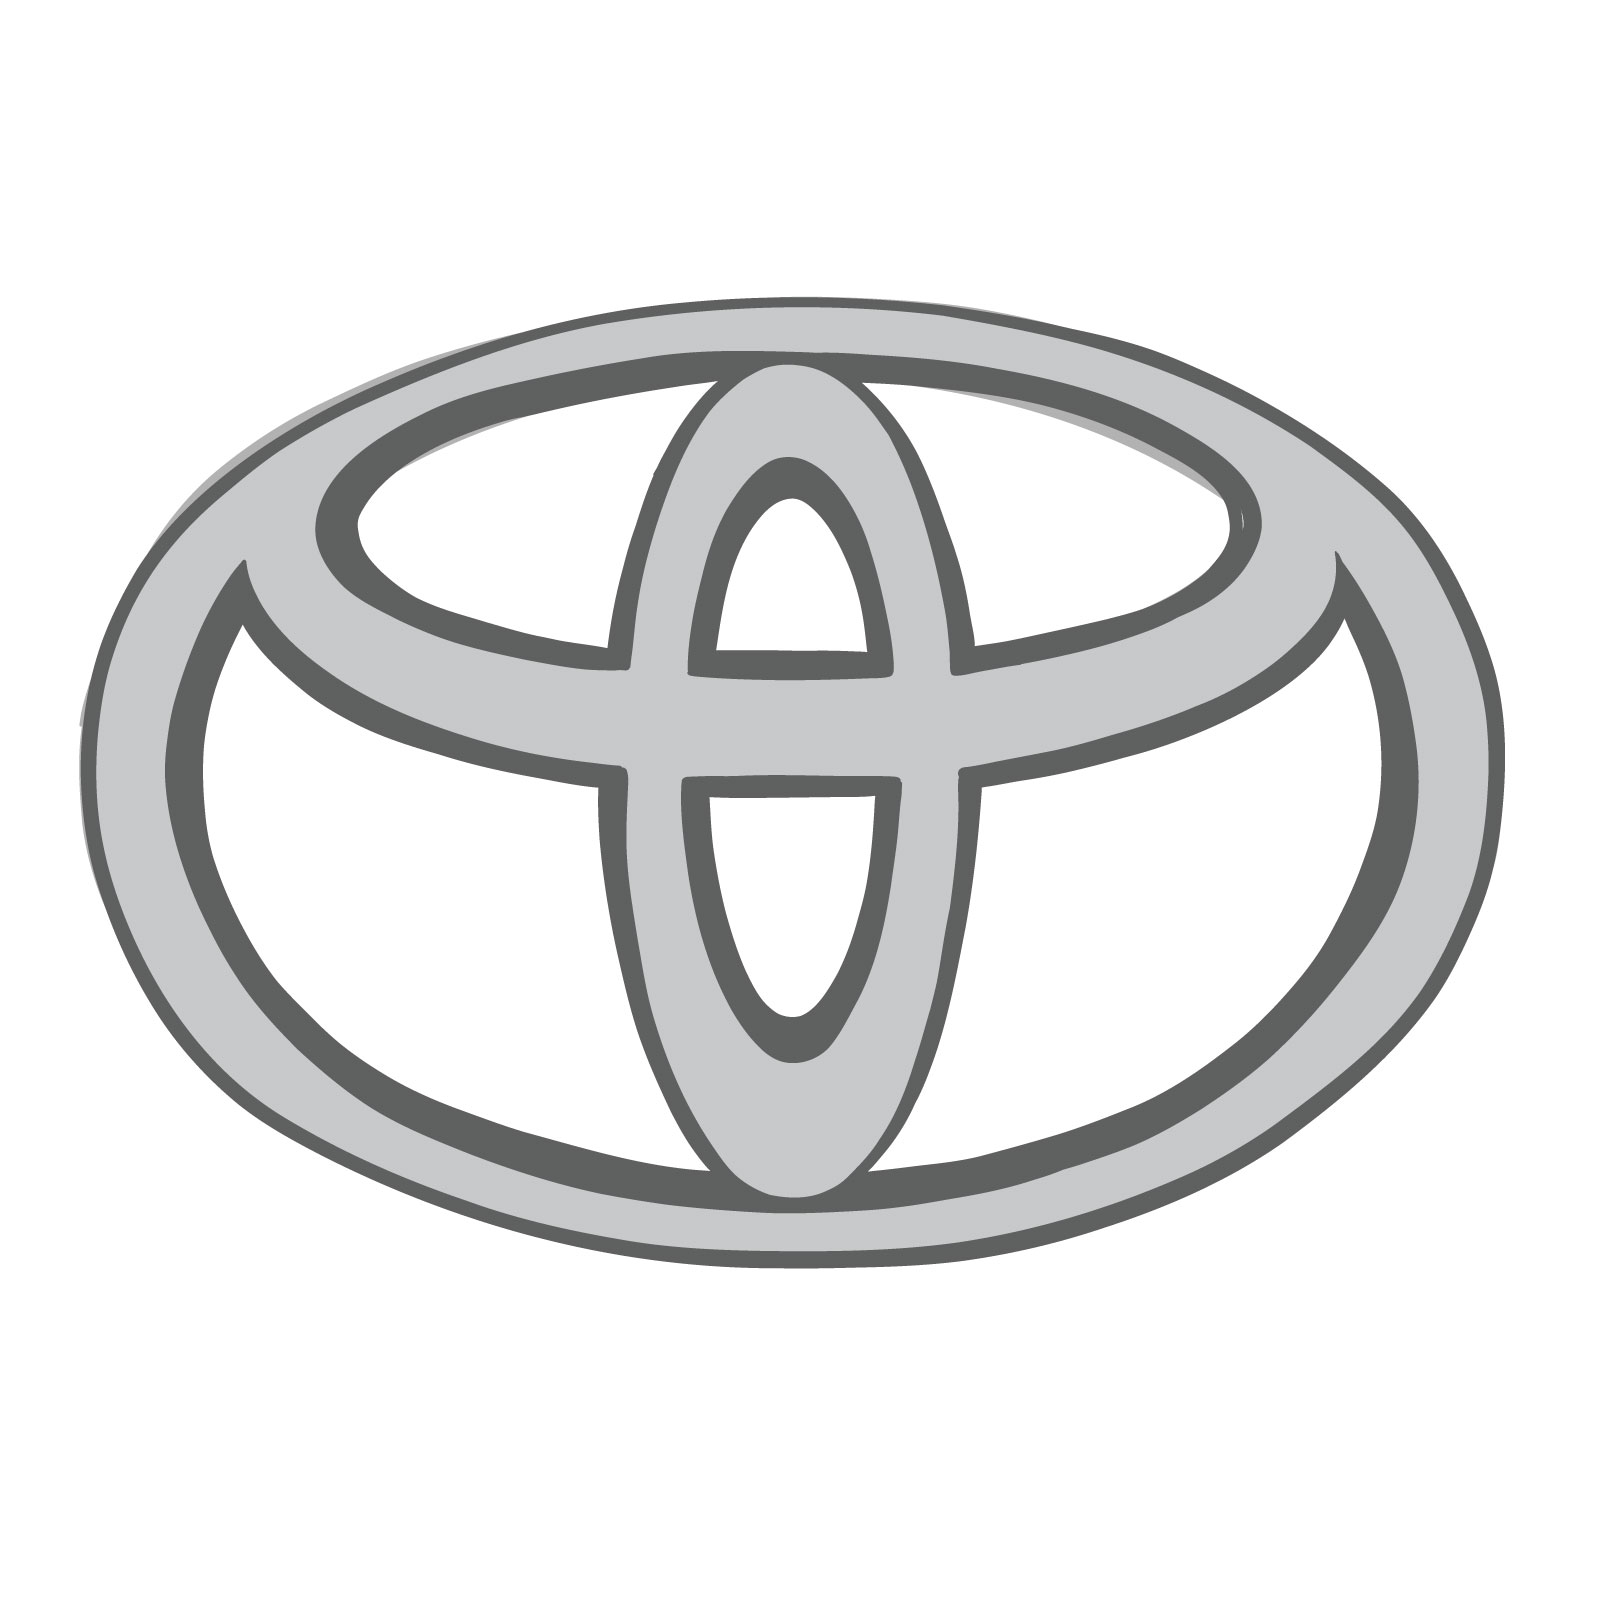 How to draw a Toyota logo - step 12